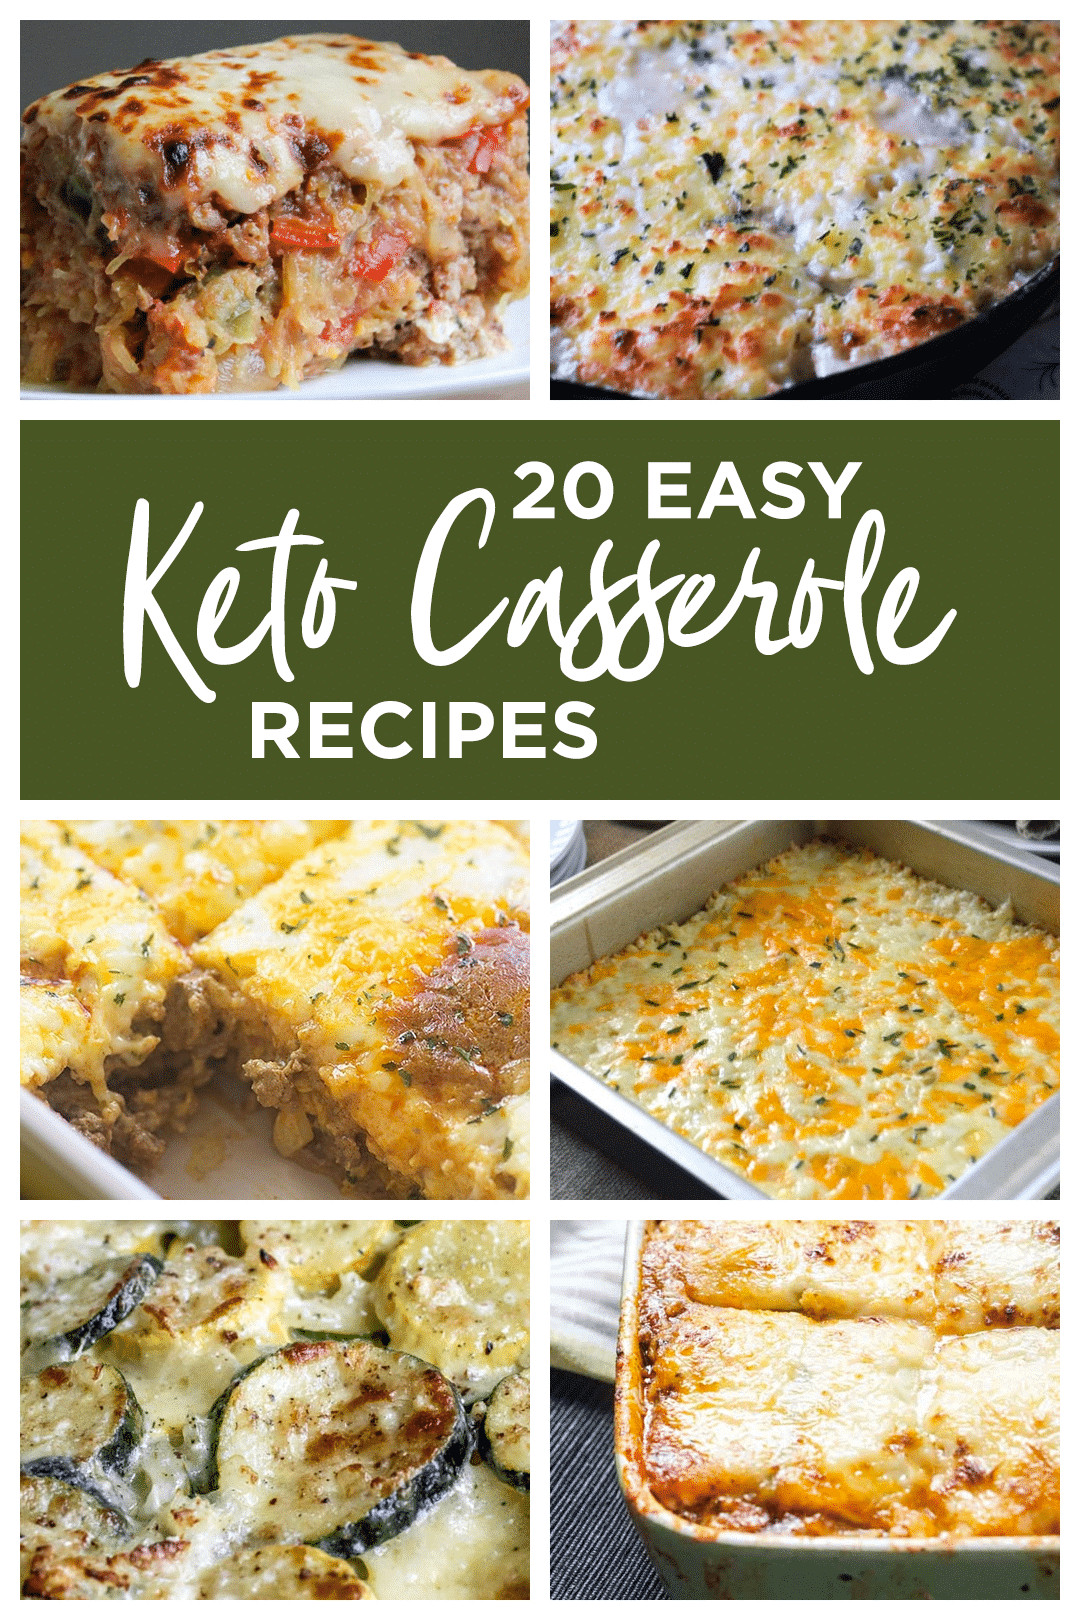 Keto Video Recipes
 20 Easy Keto Casserole Recipes low carb friendly